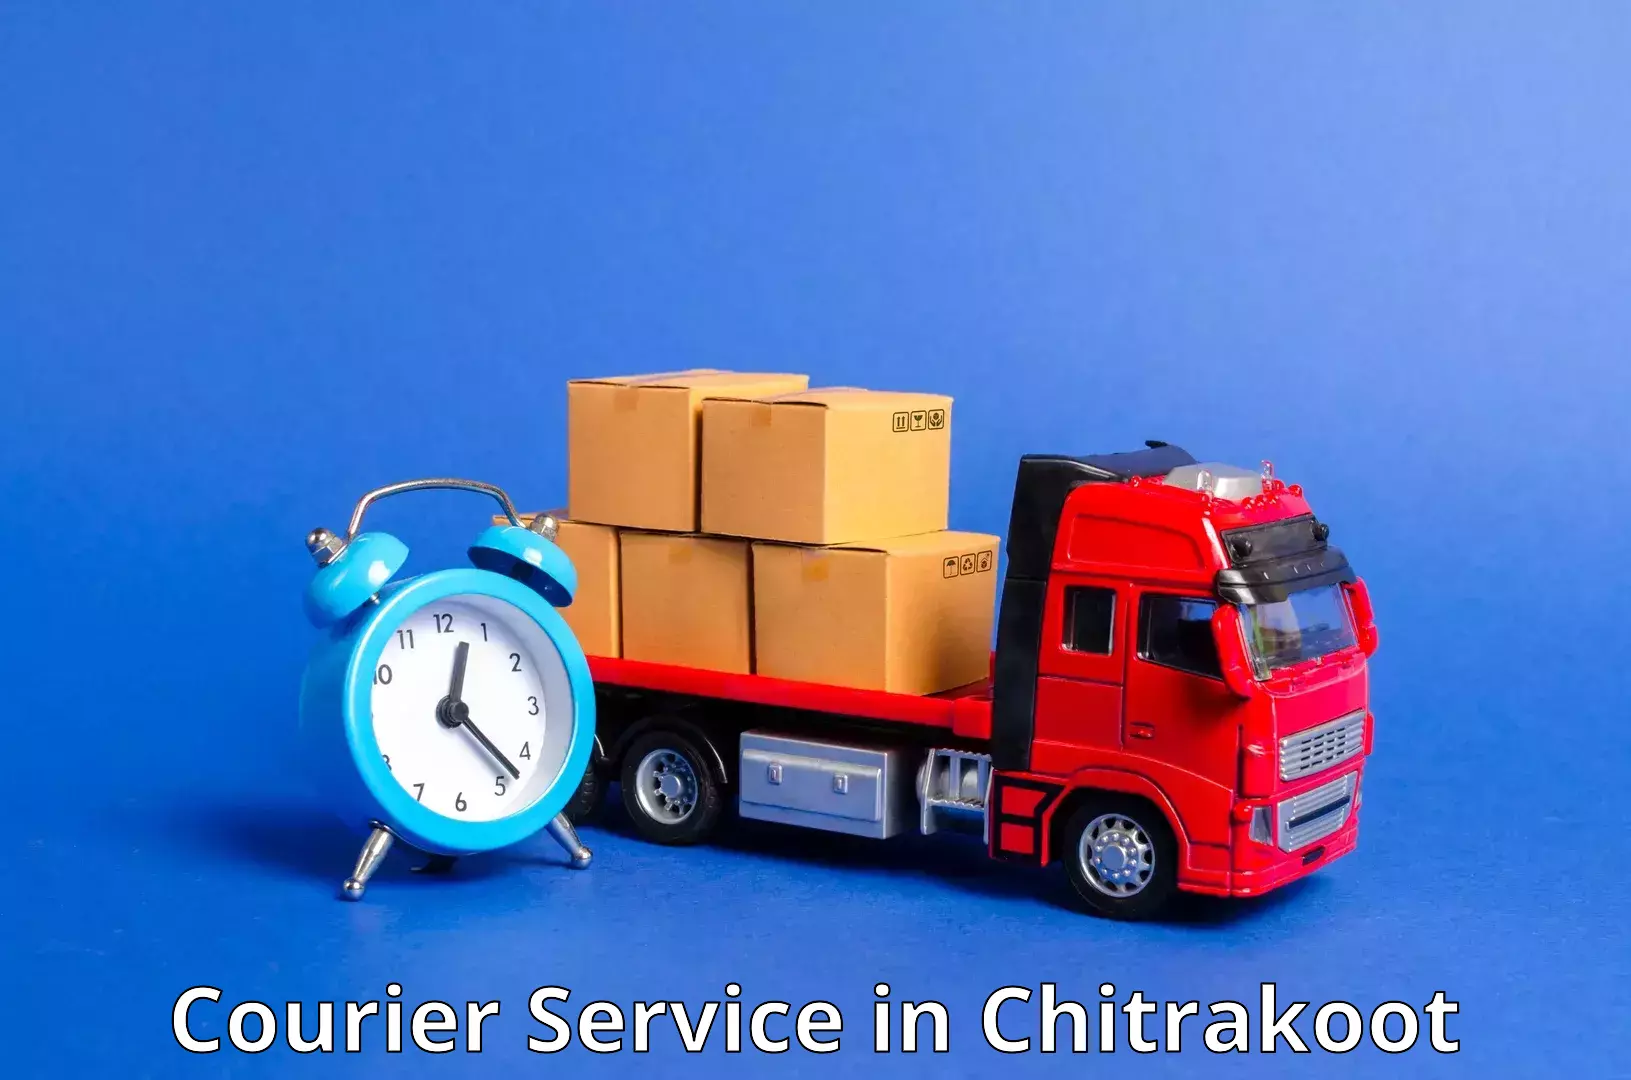 Efficient cargo handling in Chitrakoot